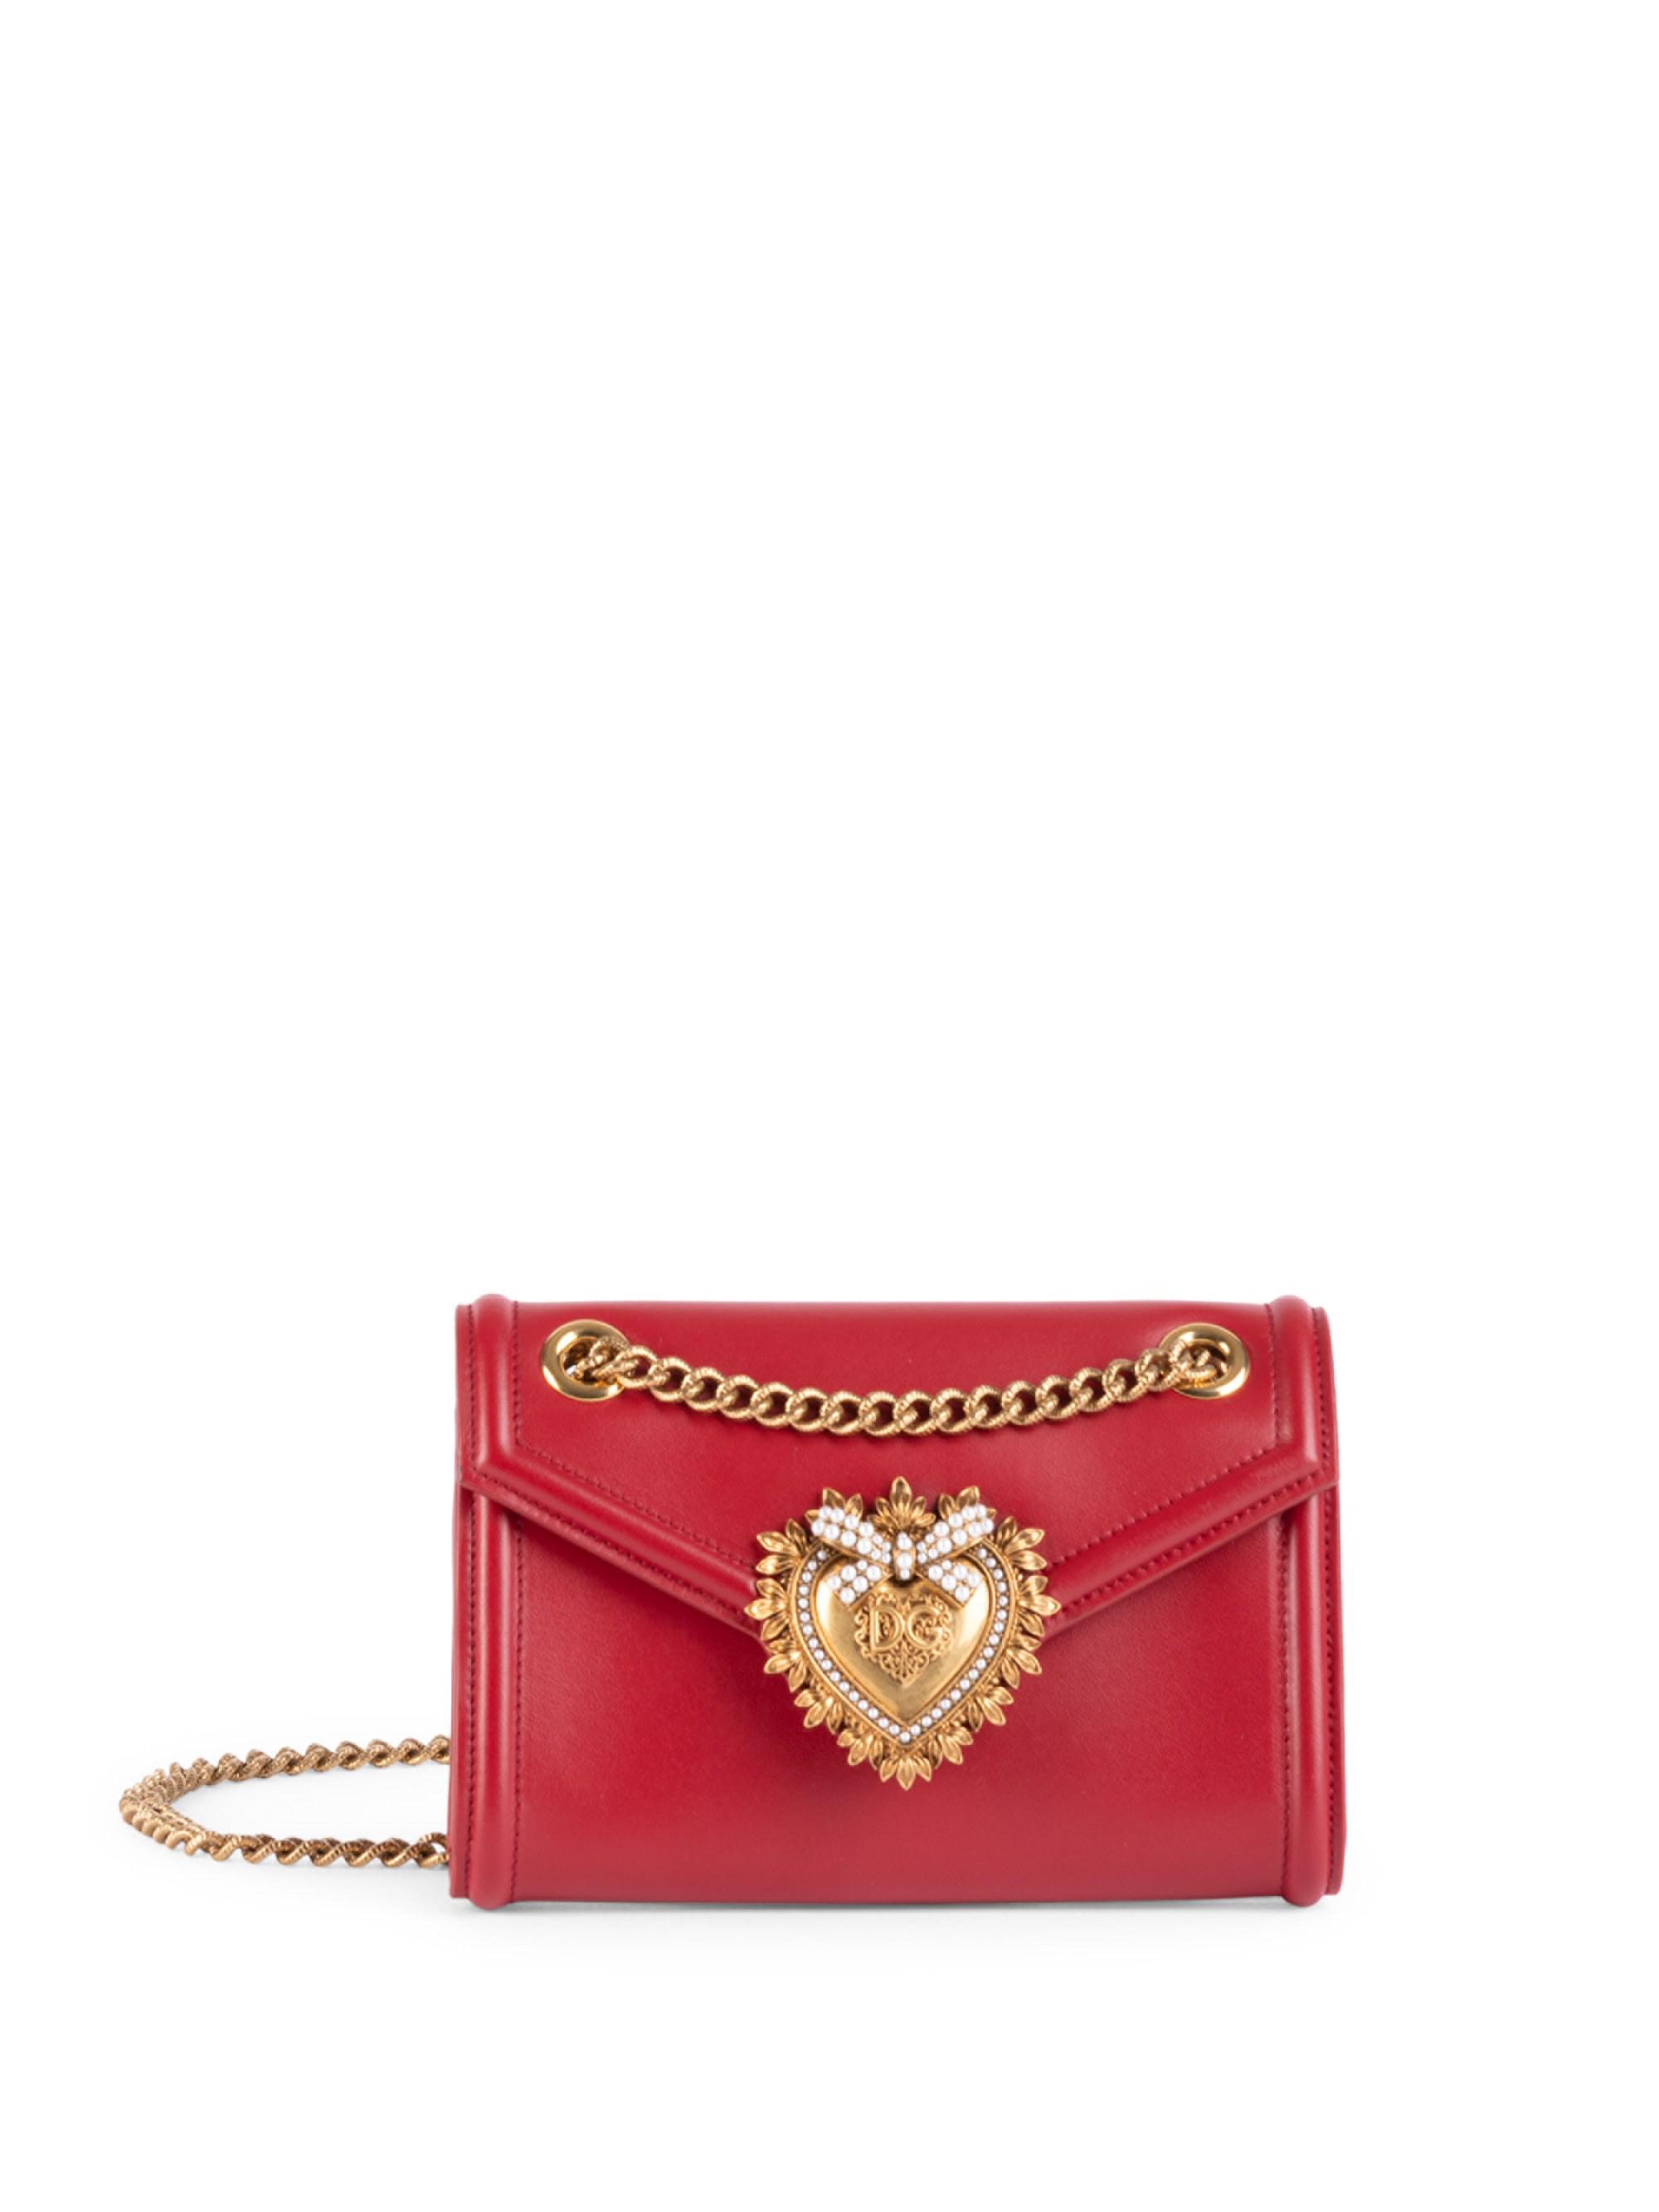 Dolce & Gabbana Mini Devotion Leather Crossbody Bag in Red - Save 23% ...